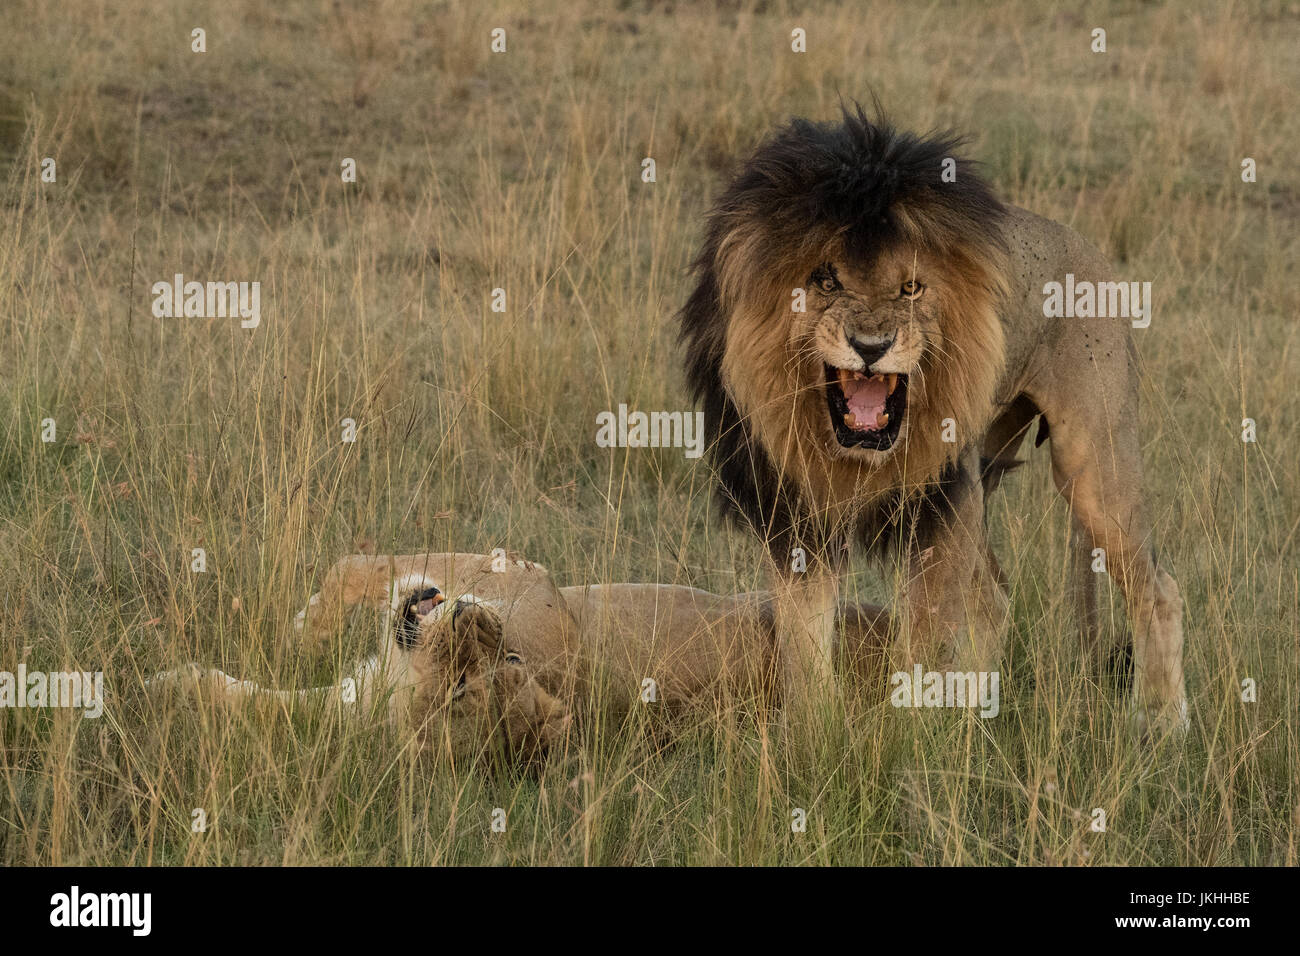 Lion Roar Female Stock Photos & Lion Roar Female Stock Images - Alamy